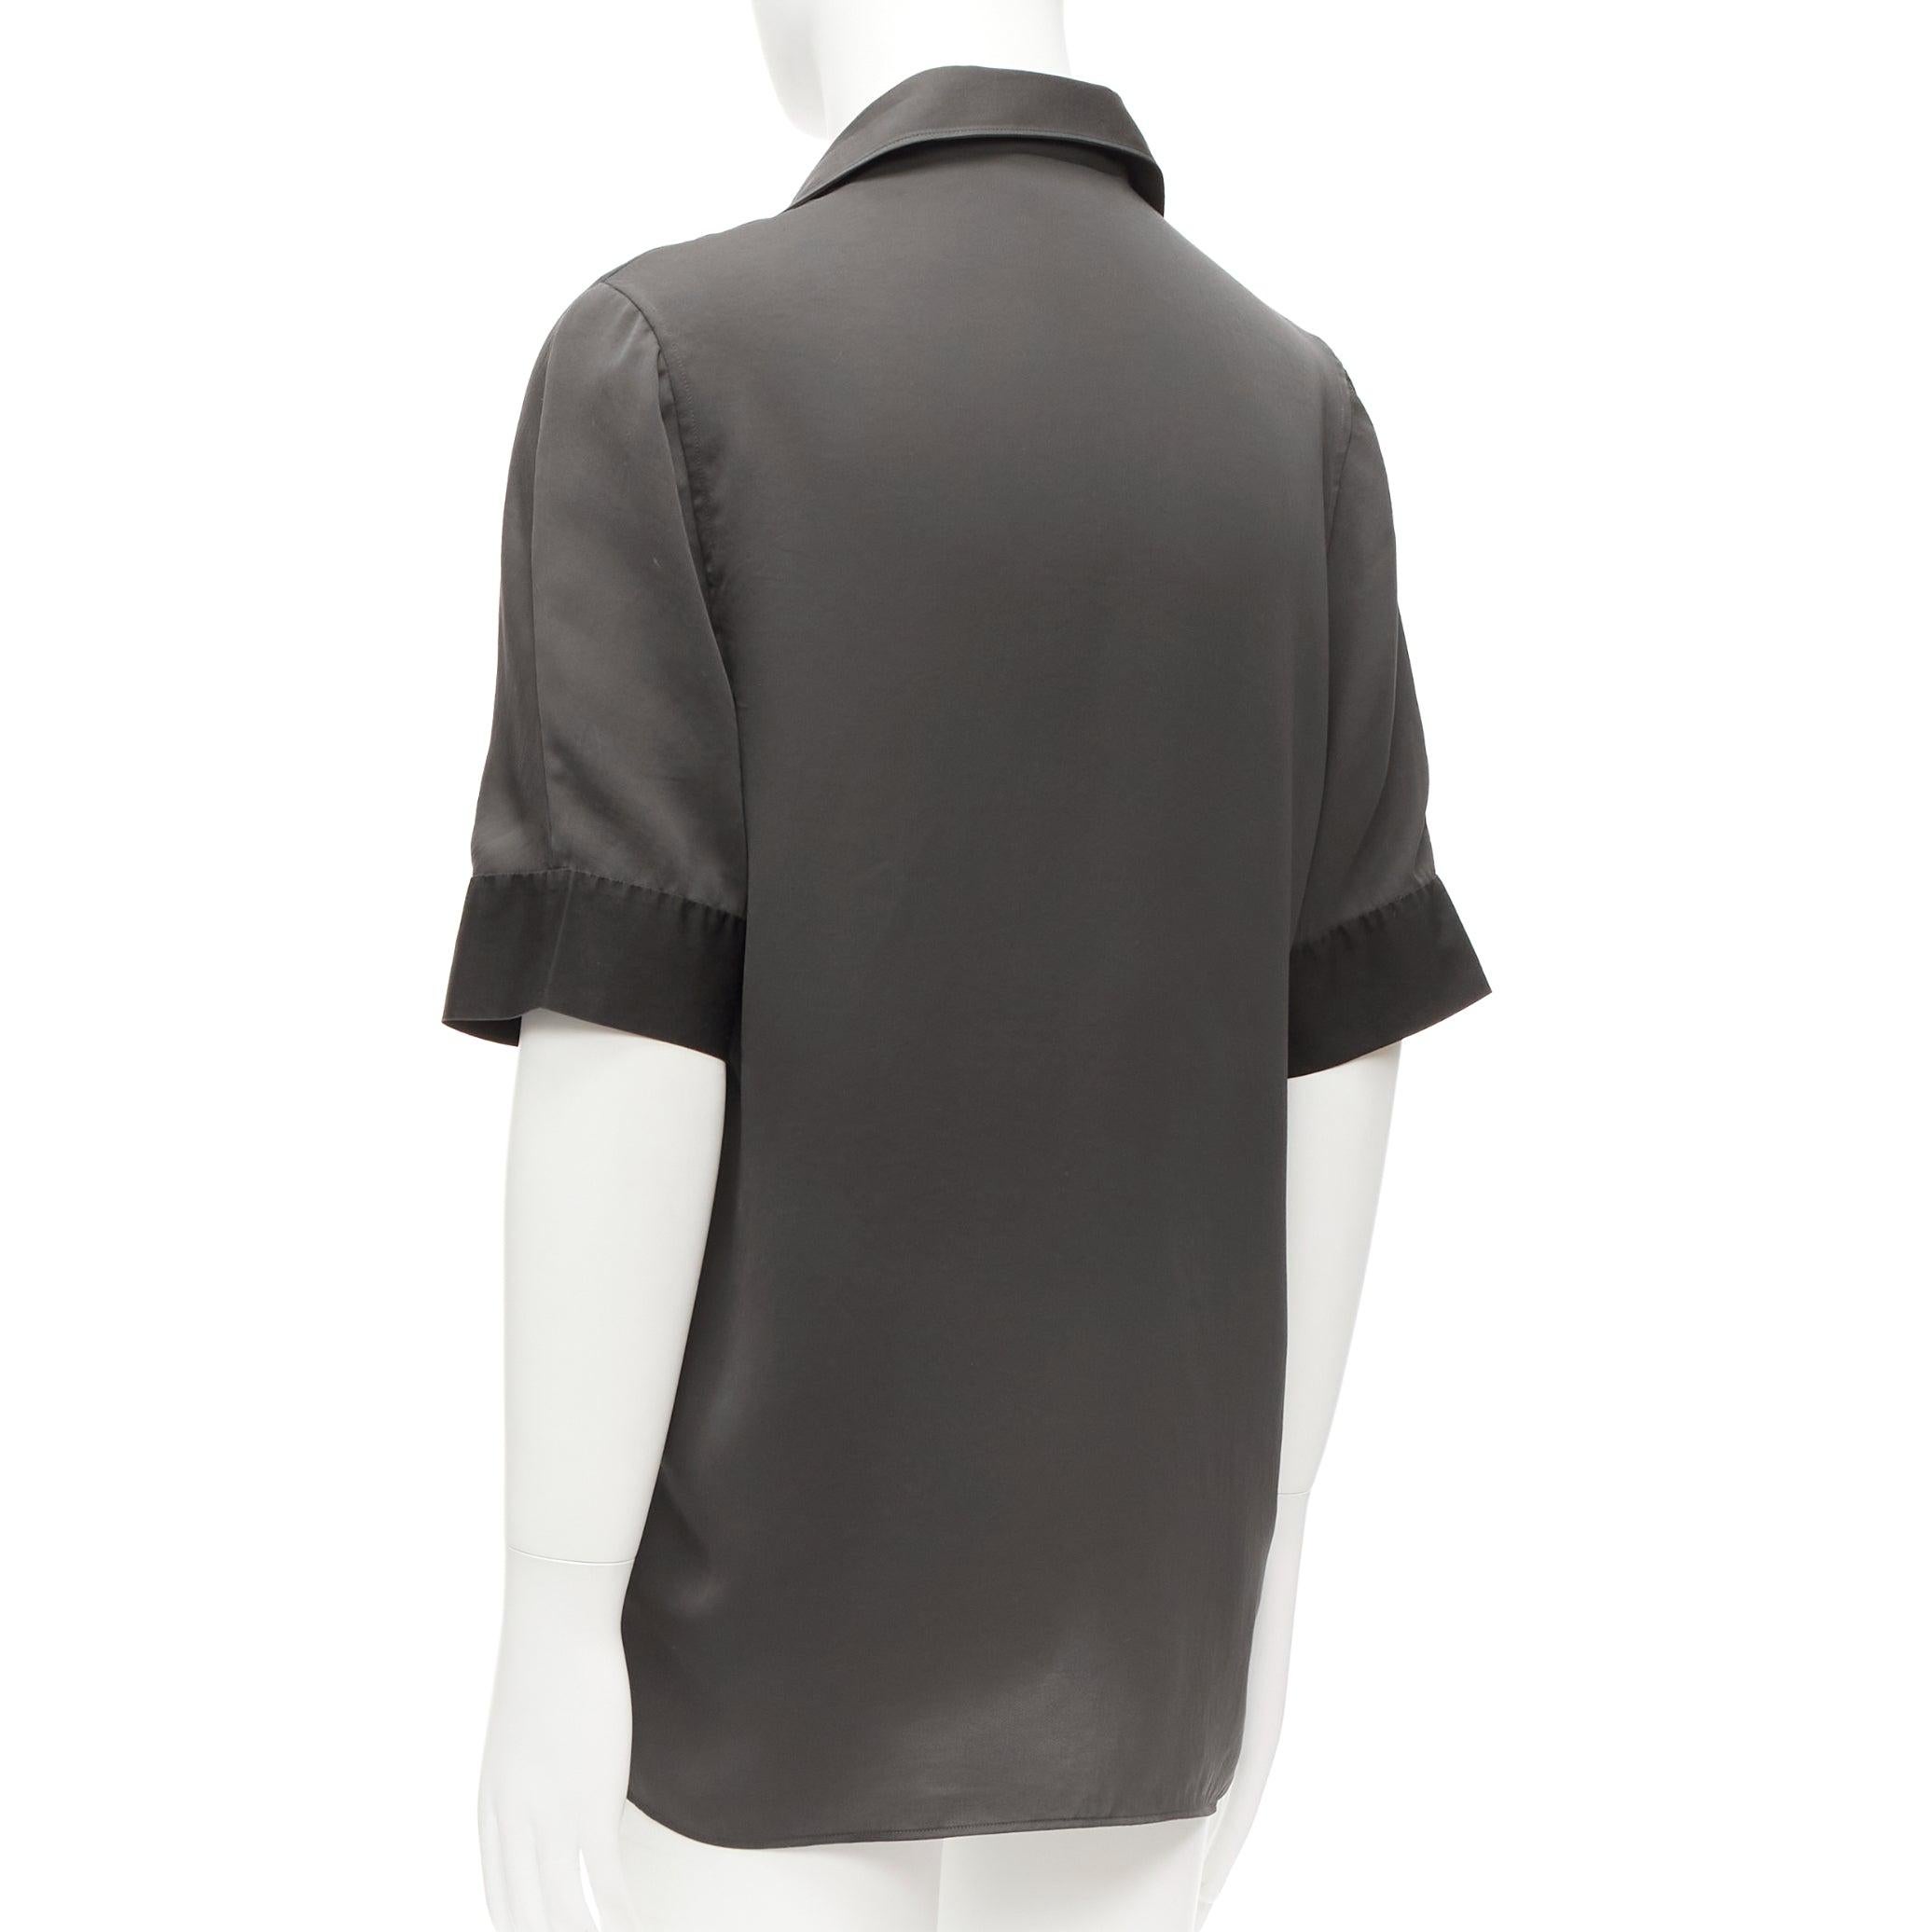 LANVIN grey black silky twill mix texture short sleeves dress shirt EU38/15 S For Sale 1